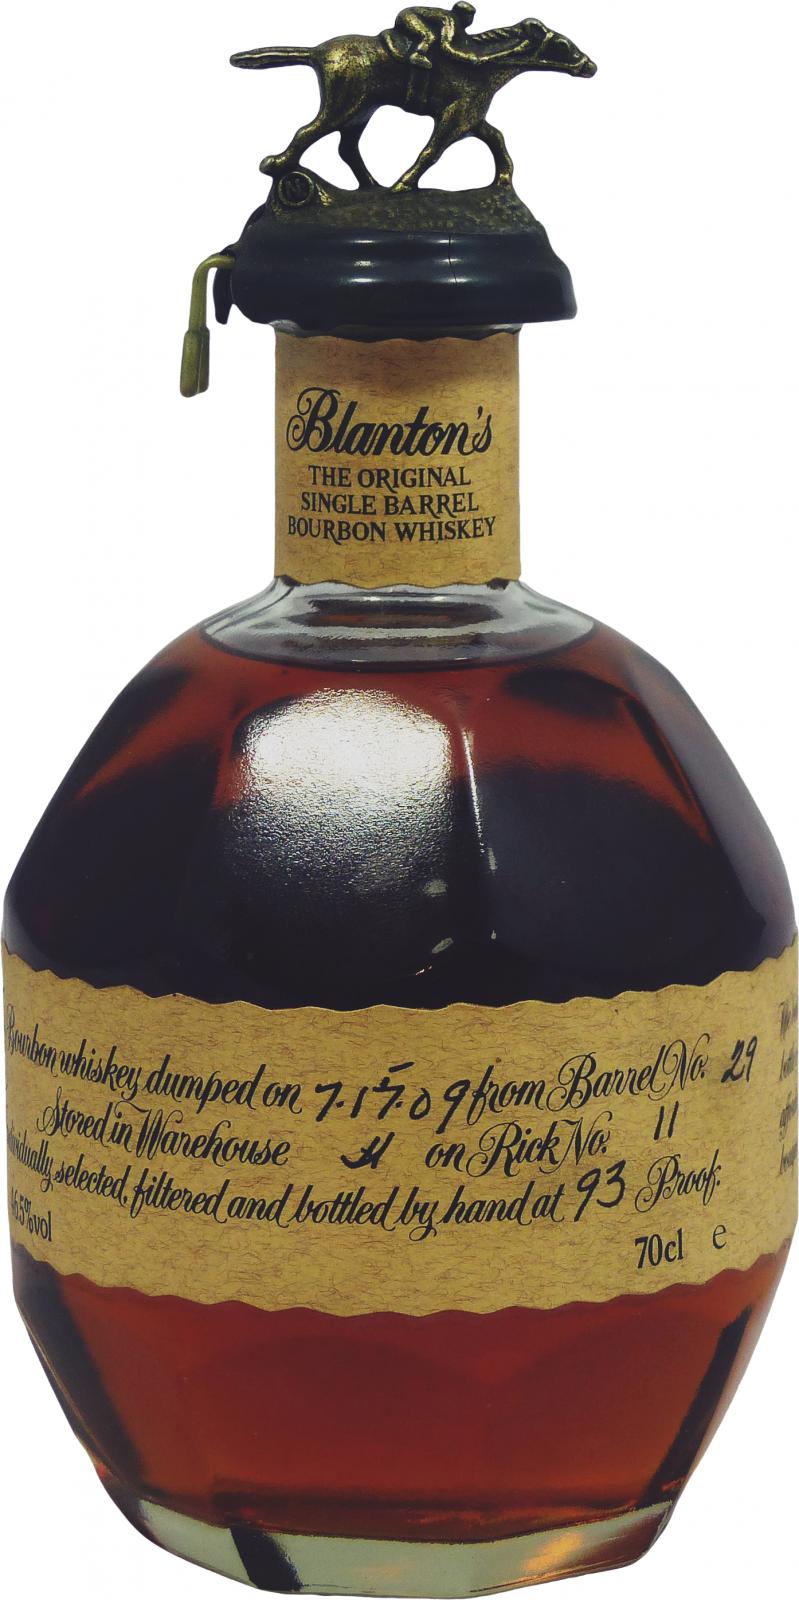 Blanton's The Original Single Barrel Bourbon Whisky #29 46.5% 700ml